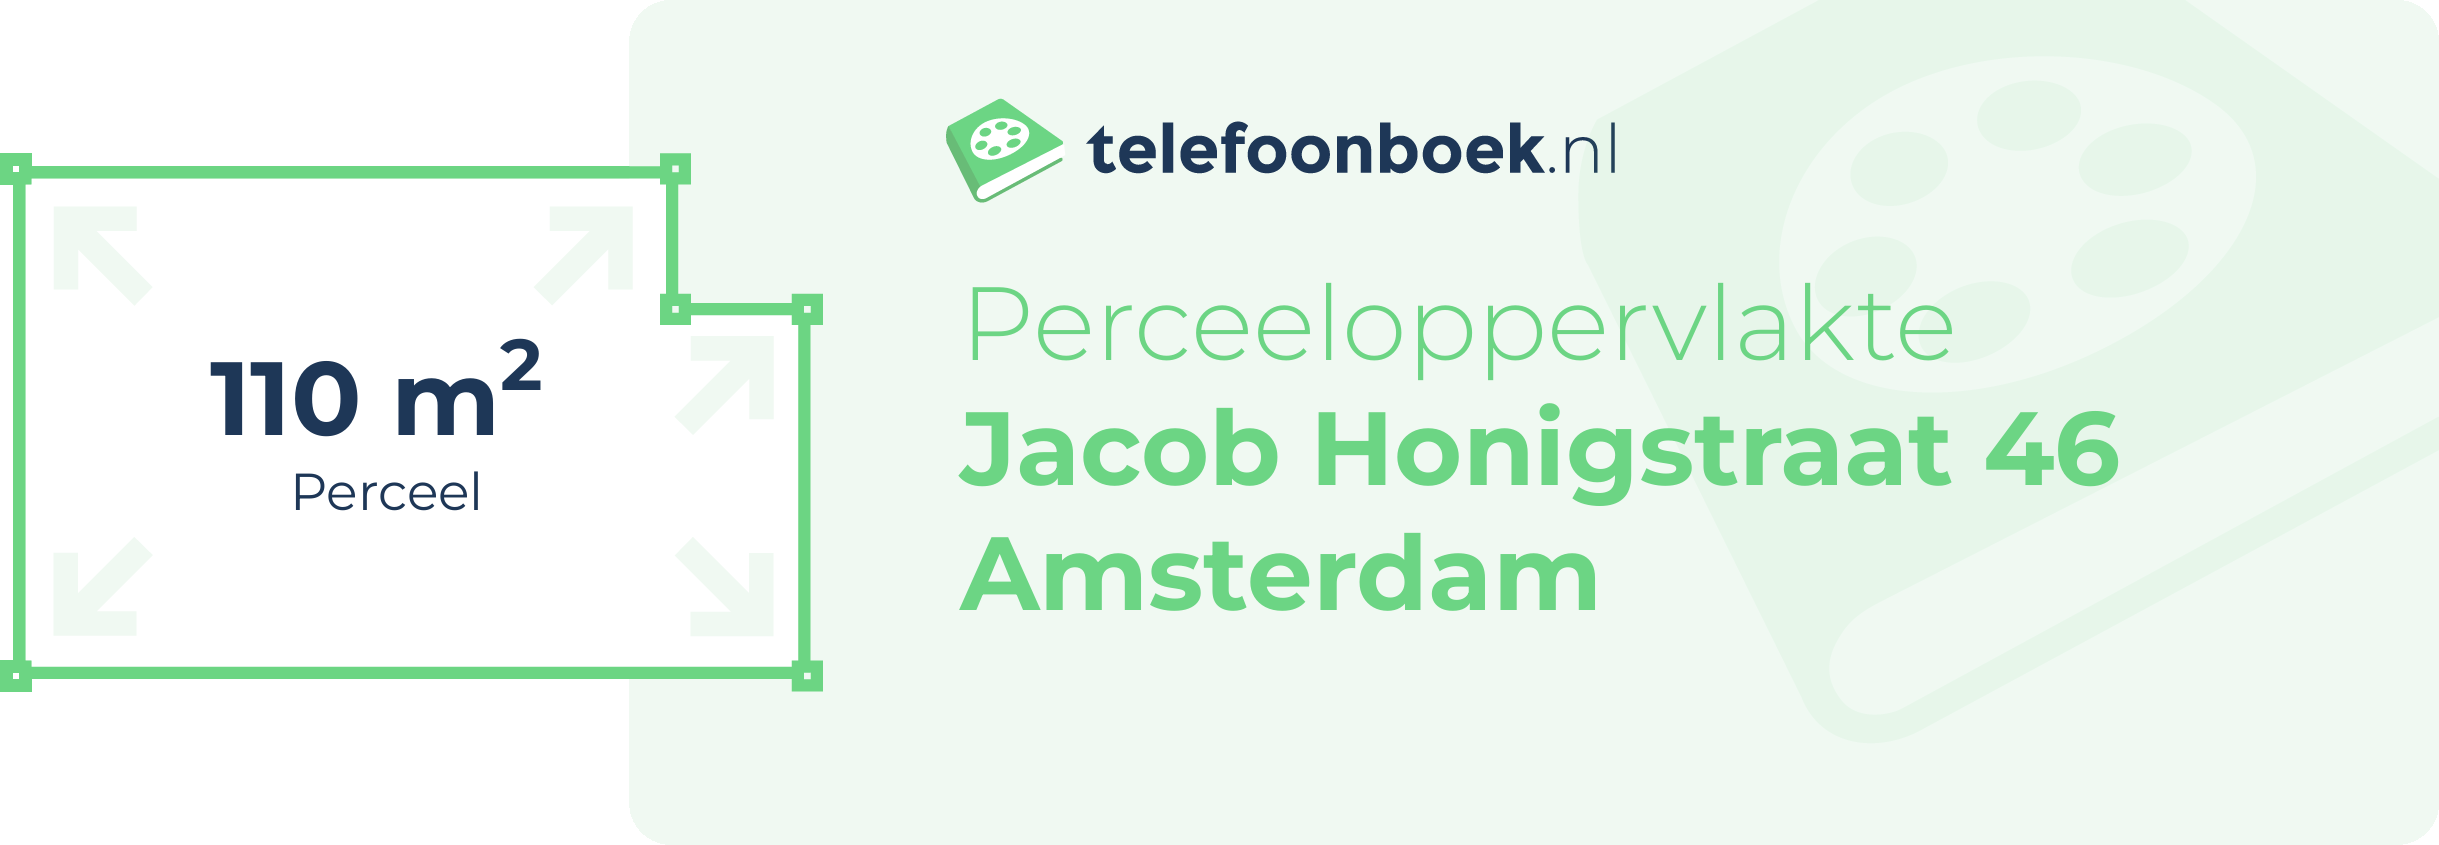 Perceeloppervlakte Jacob Honigstraat 46 Amsterdam